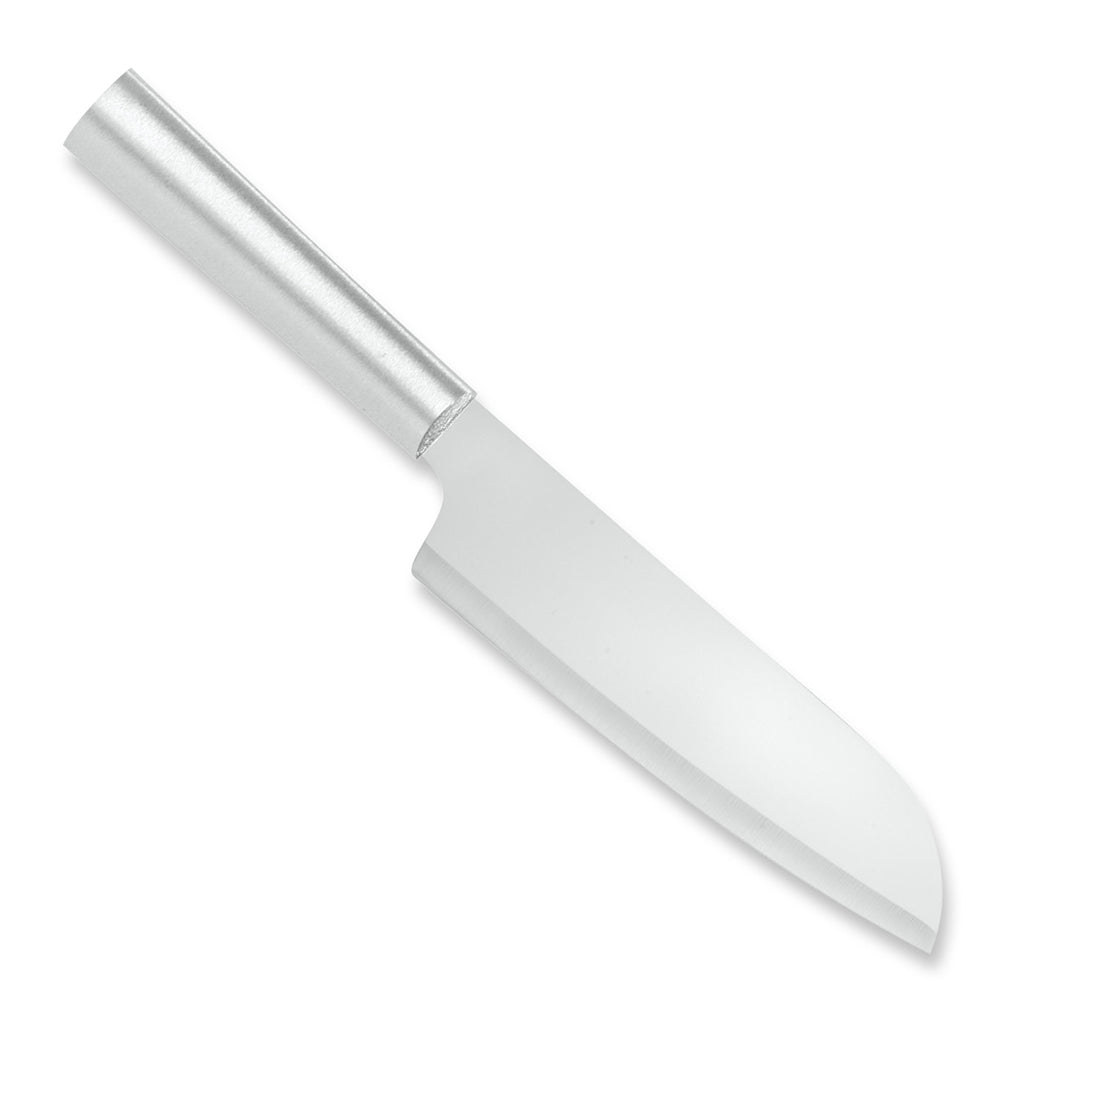 RADA CUTLRY S38 - 7 Stainless Steel Kitchen Knives Starter Set